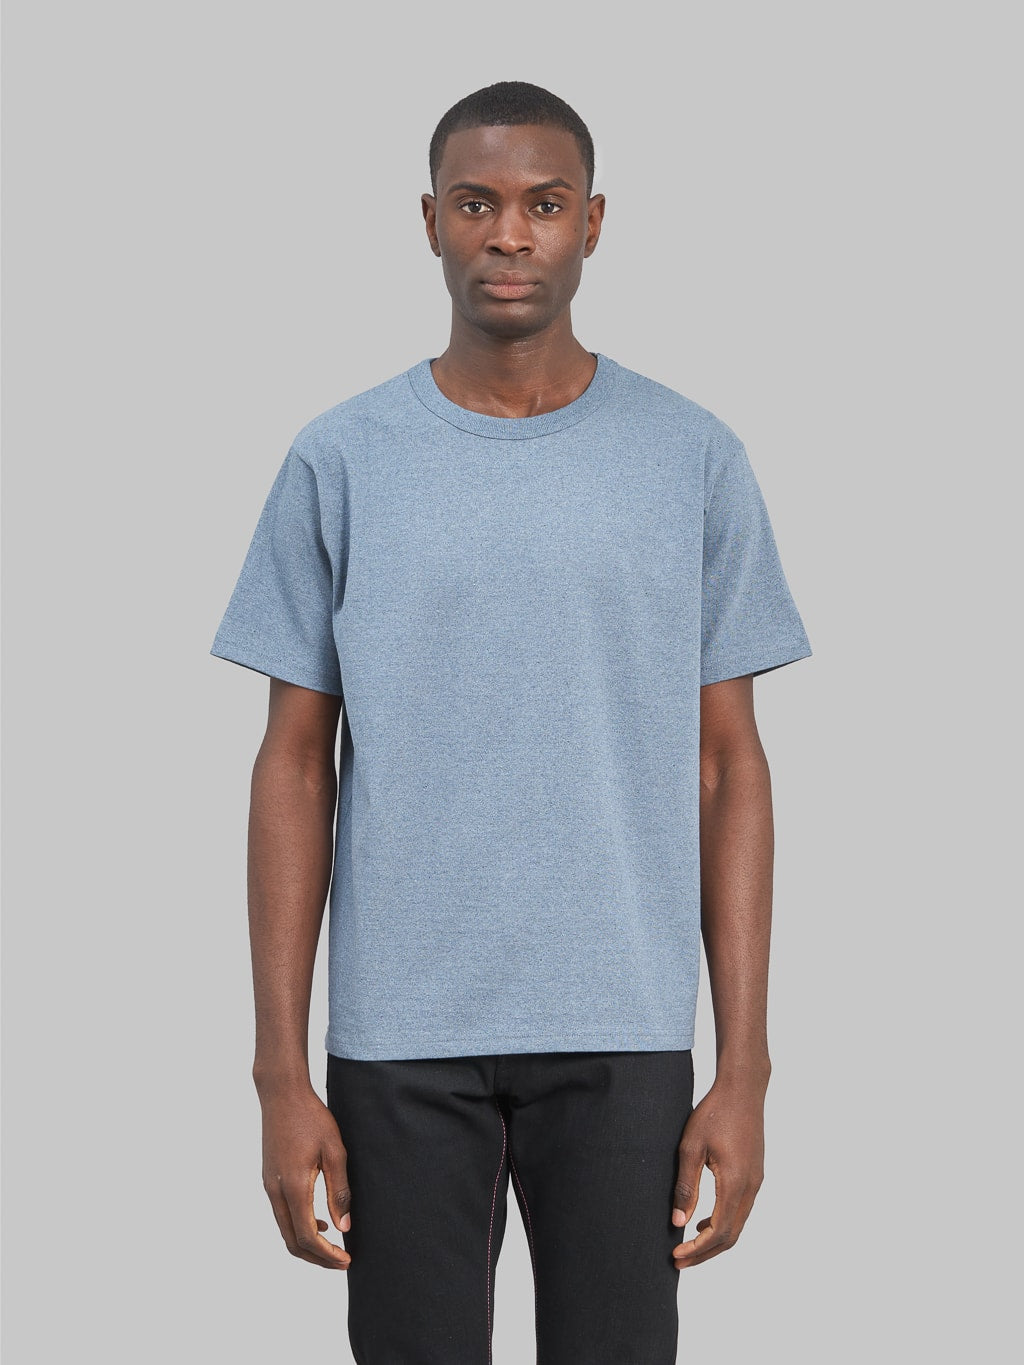 Japan Blue Recycled Denim Tshirt mid Indigo front look